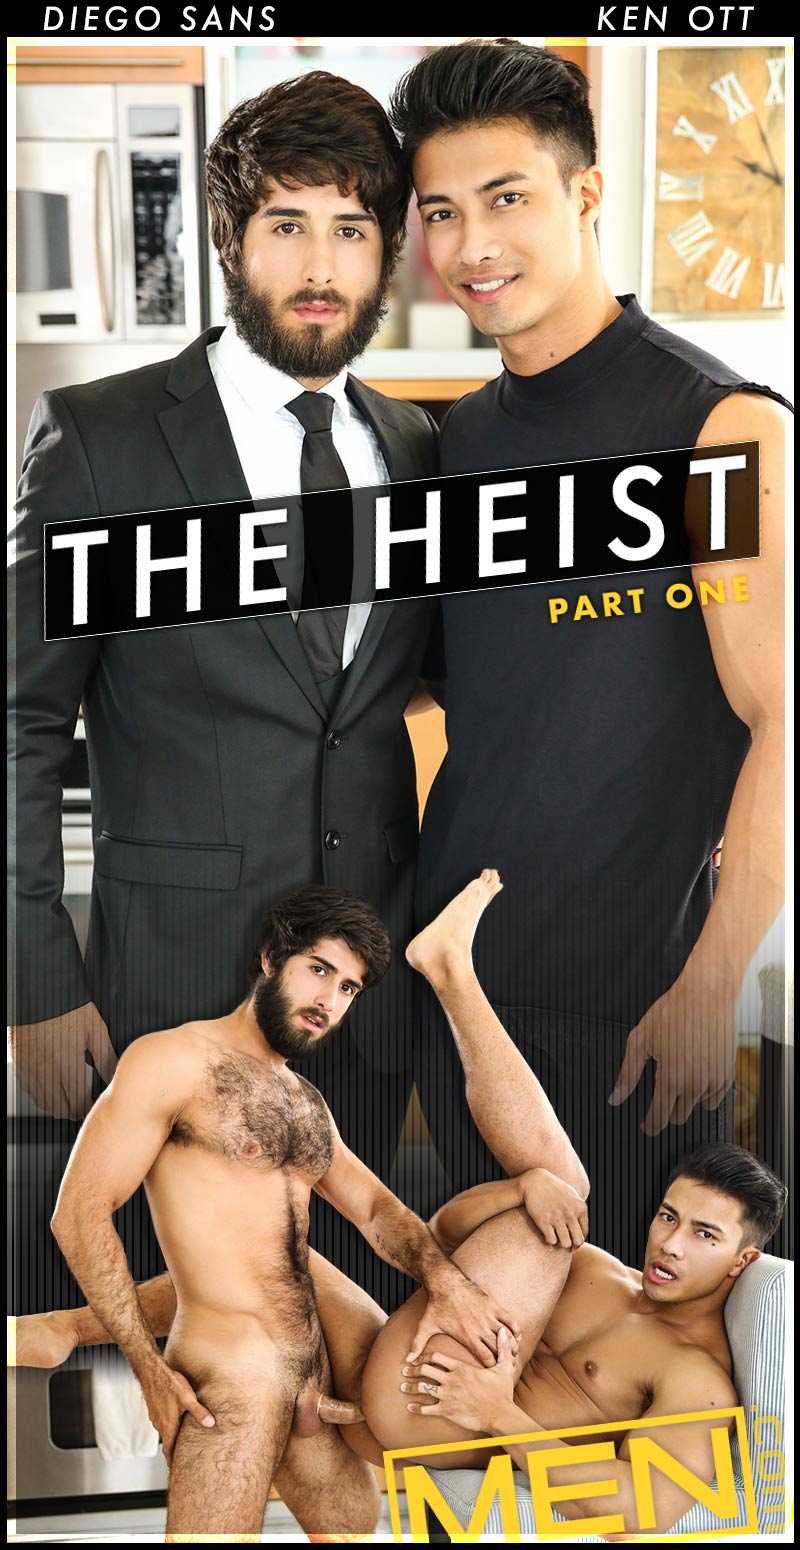 The Heist, Part 1 (Diego Sans Fucks Ken Ott) at Drill My Hole